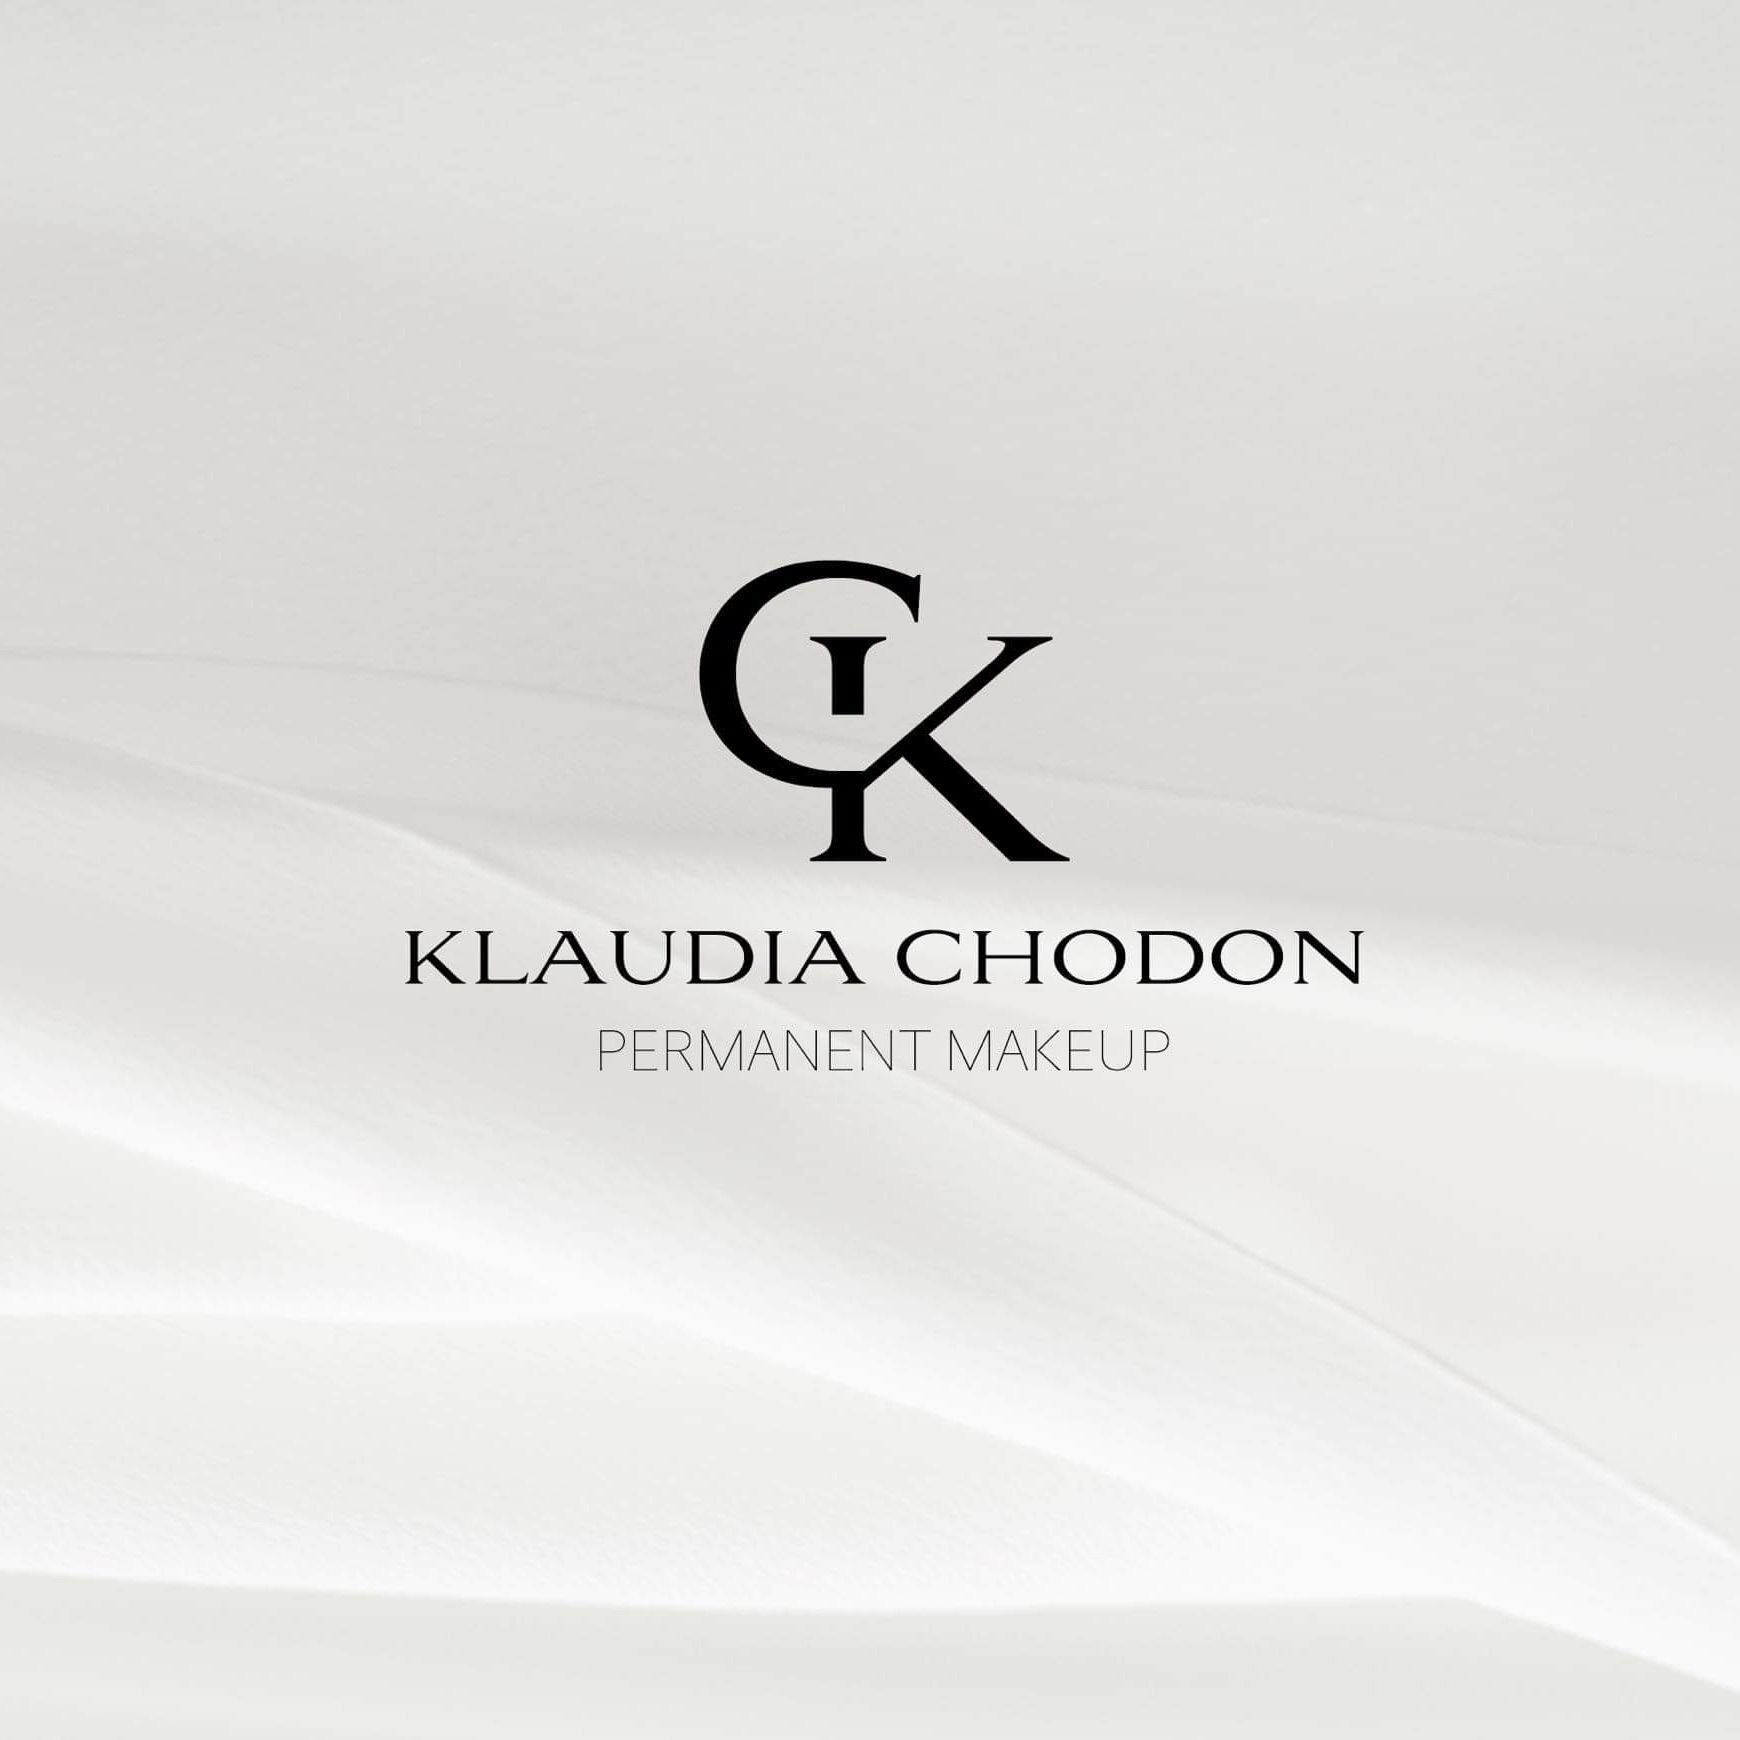 Klaudia Chodon Permanent Make-up, Partyzancka 3, 21-010, Łęczna